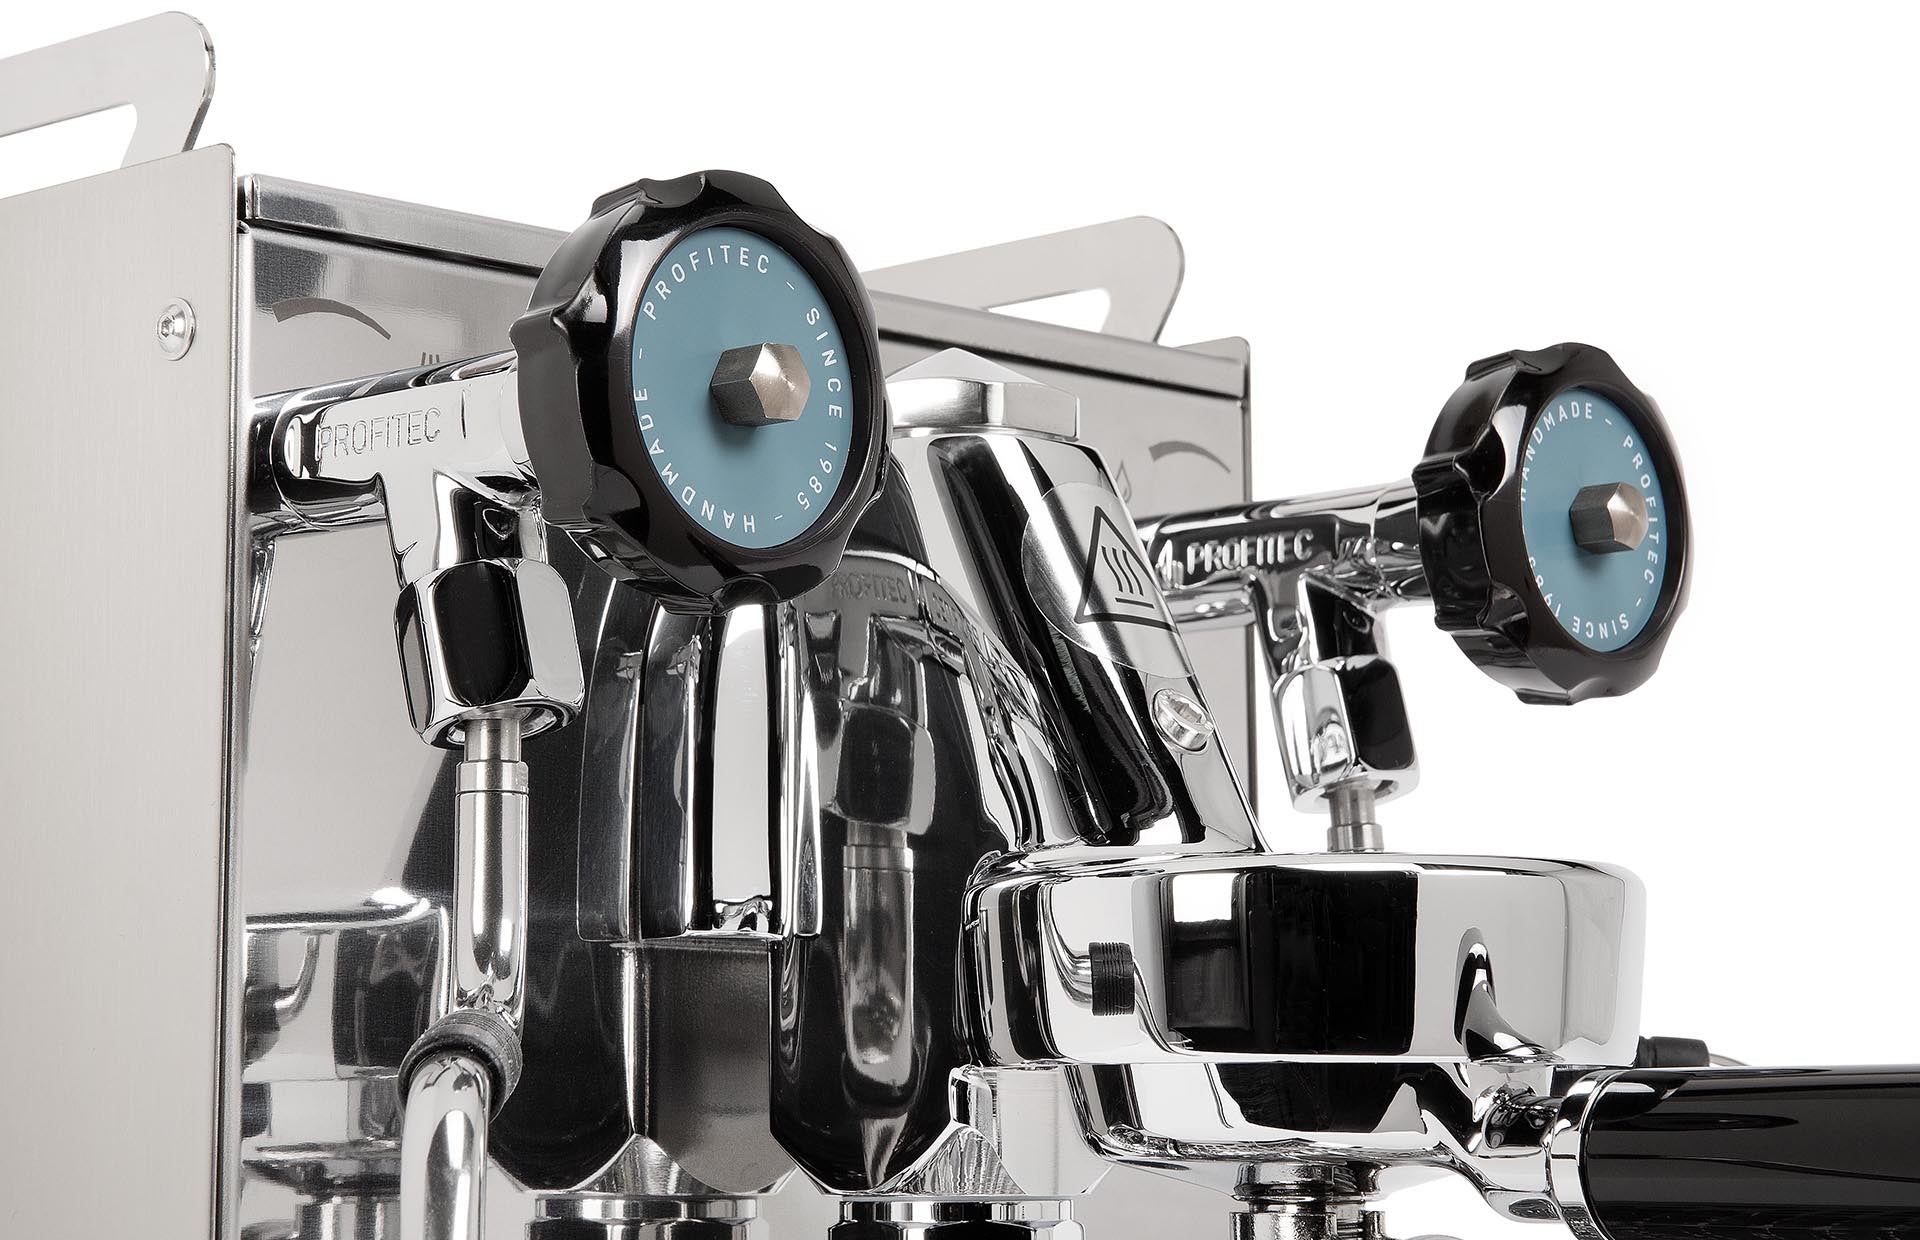 DEMO - Profitec Pro 400 - Machine Espresso